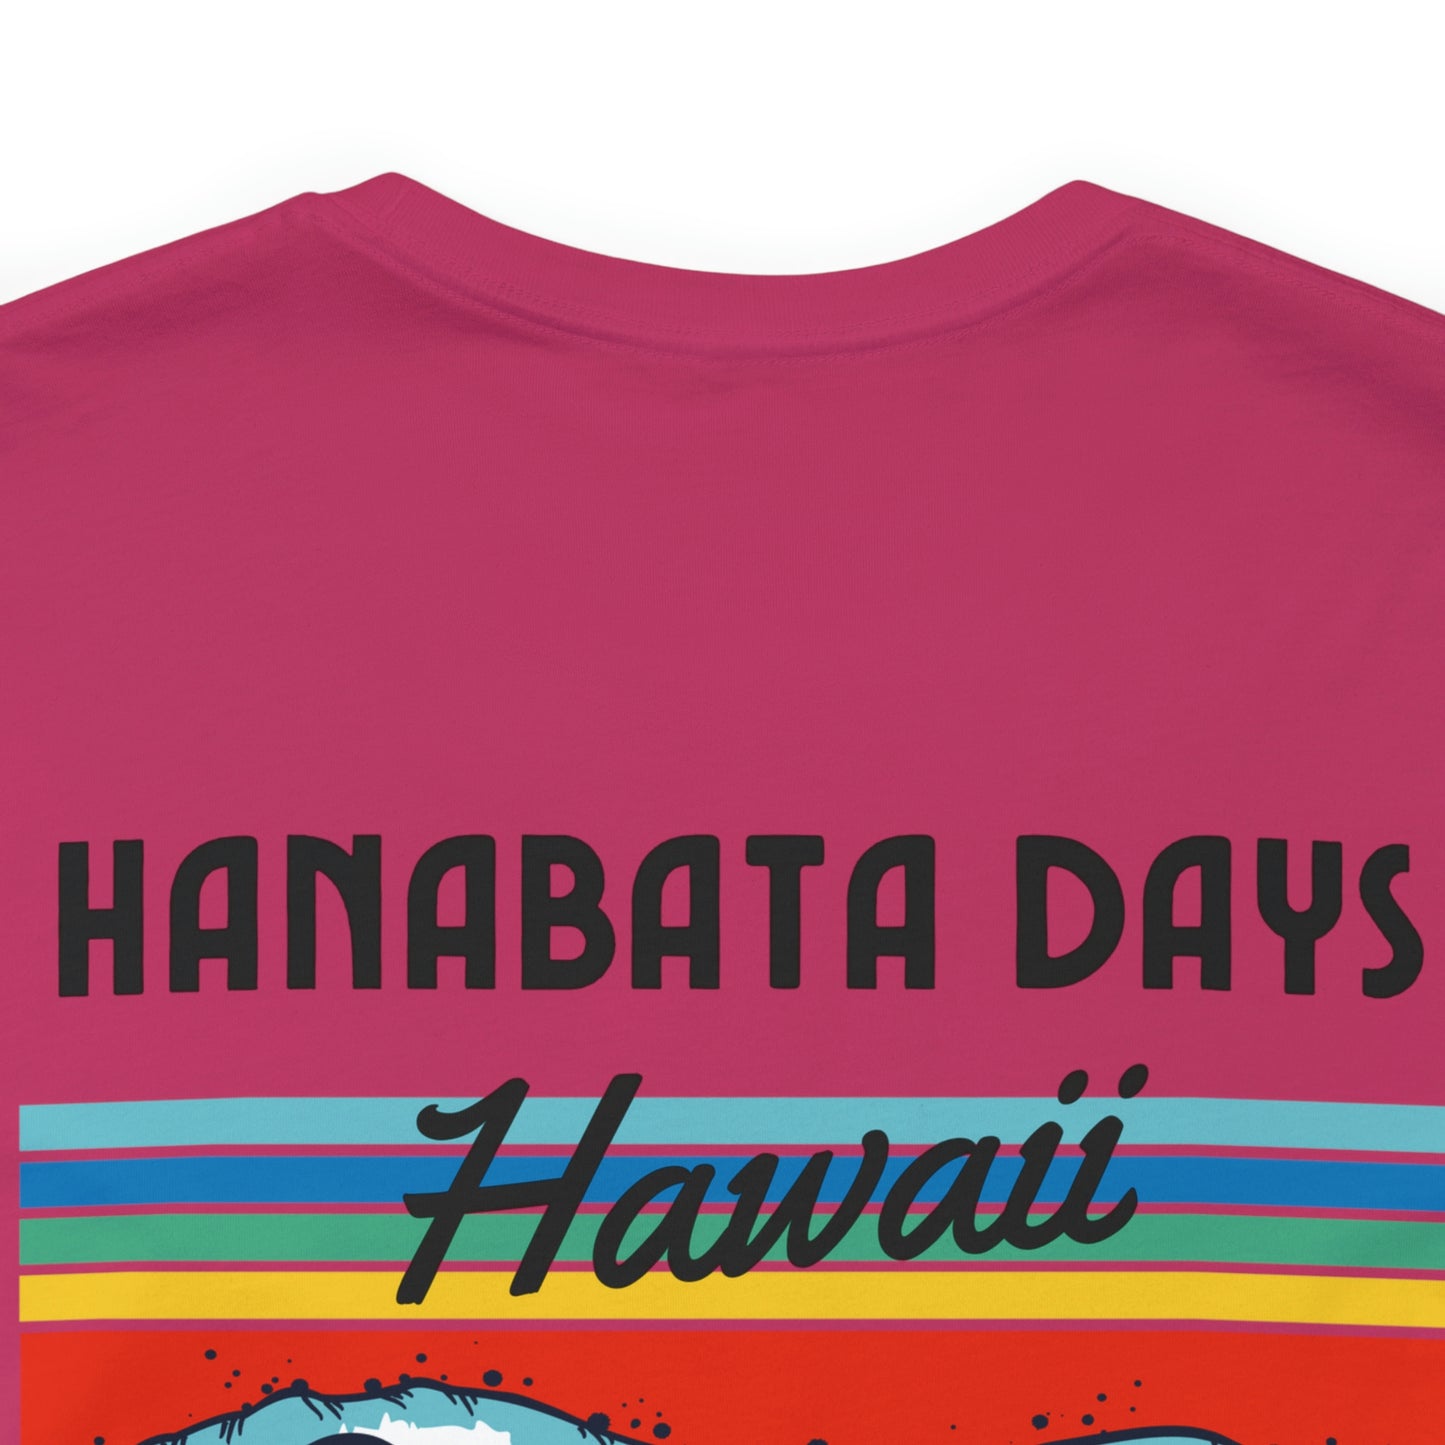 Hanabata Days Shirt, Hawaii North Shore Shirt, Unisex Hanabata Days T-Shirt